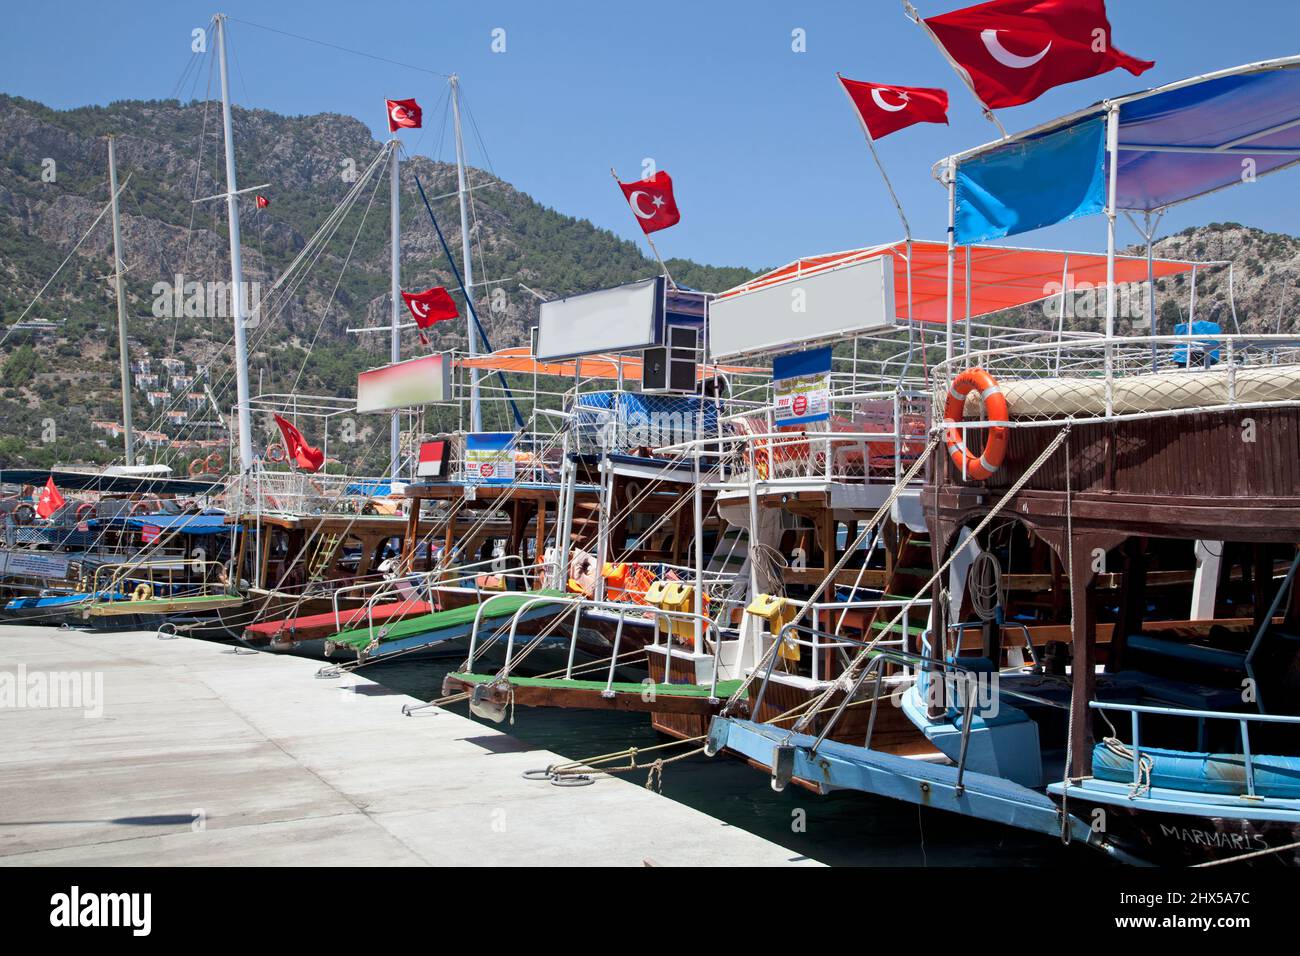 Turkey, near Marmaris, Turunc, tourboats Stock Photo